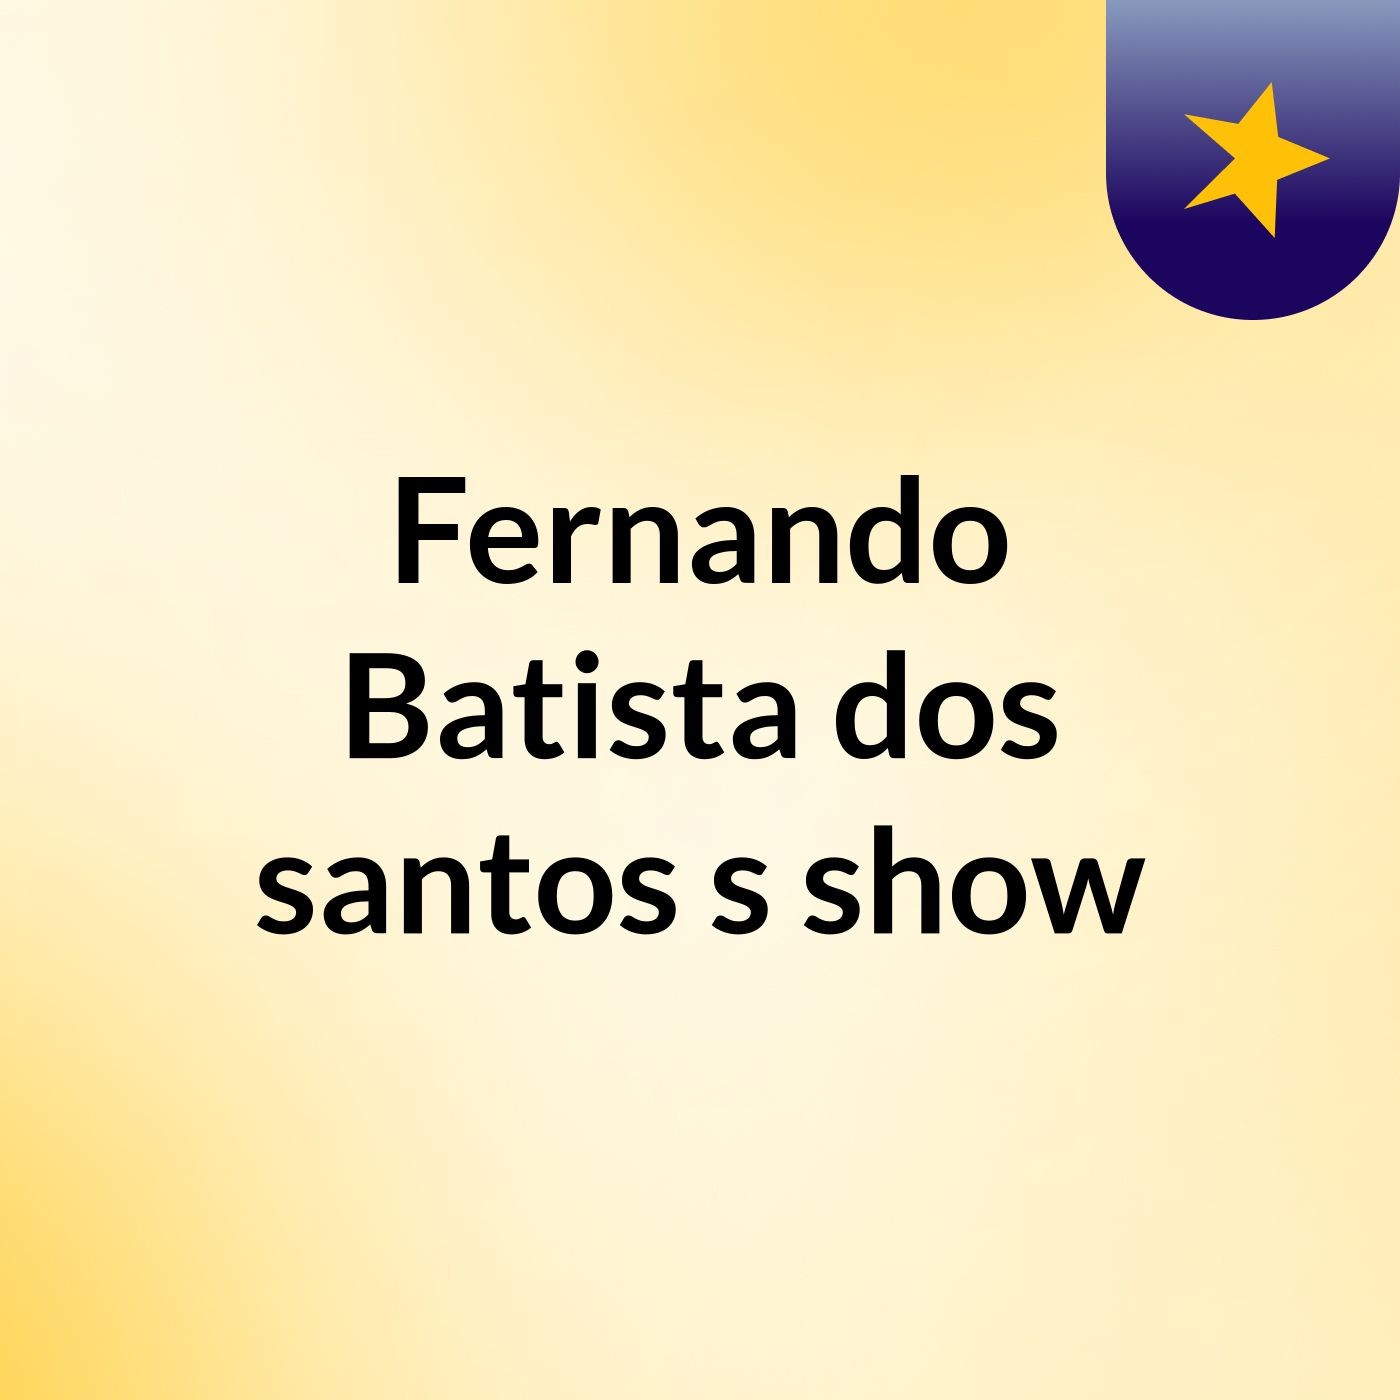 Fernando Batista dos santos's show